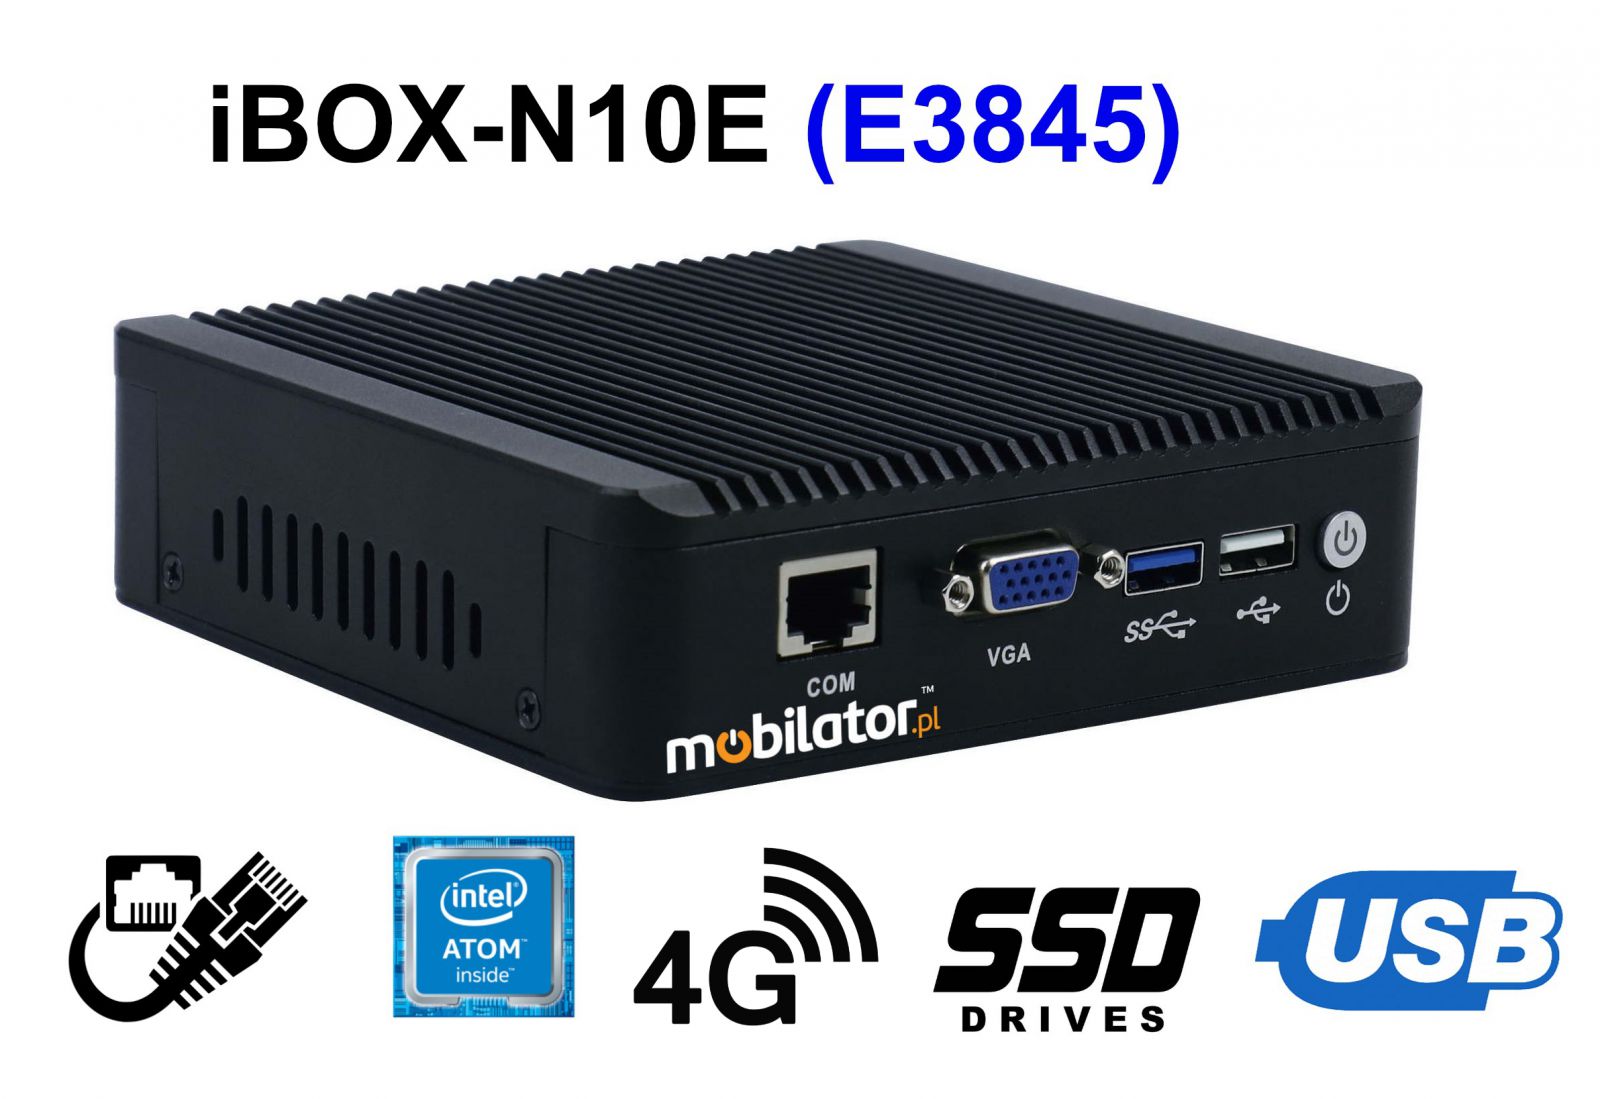 iBOX-N10E (E3845) - Cheap Industrial computer with VGA port and 4x LAN RJ45